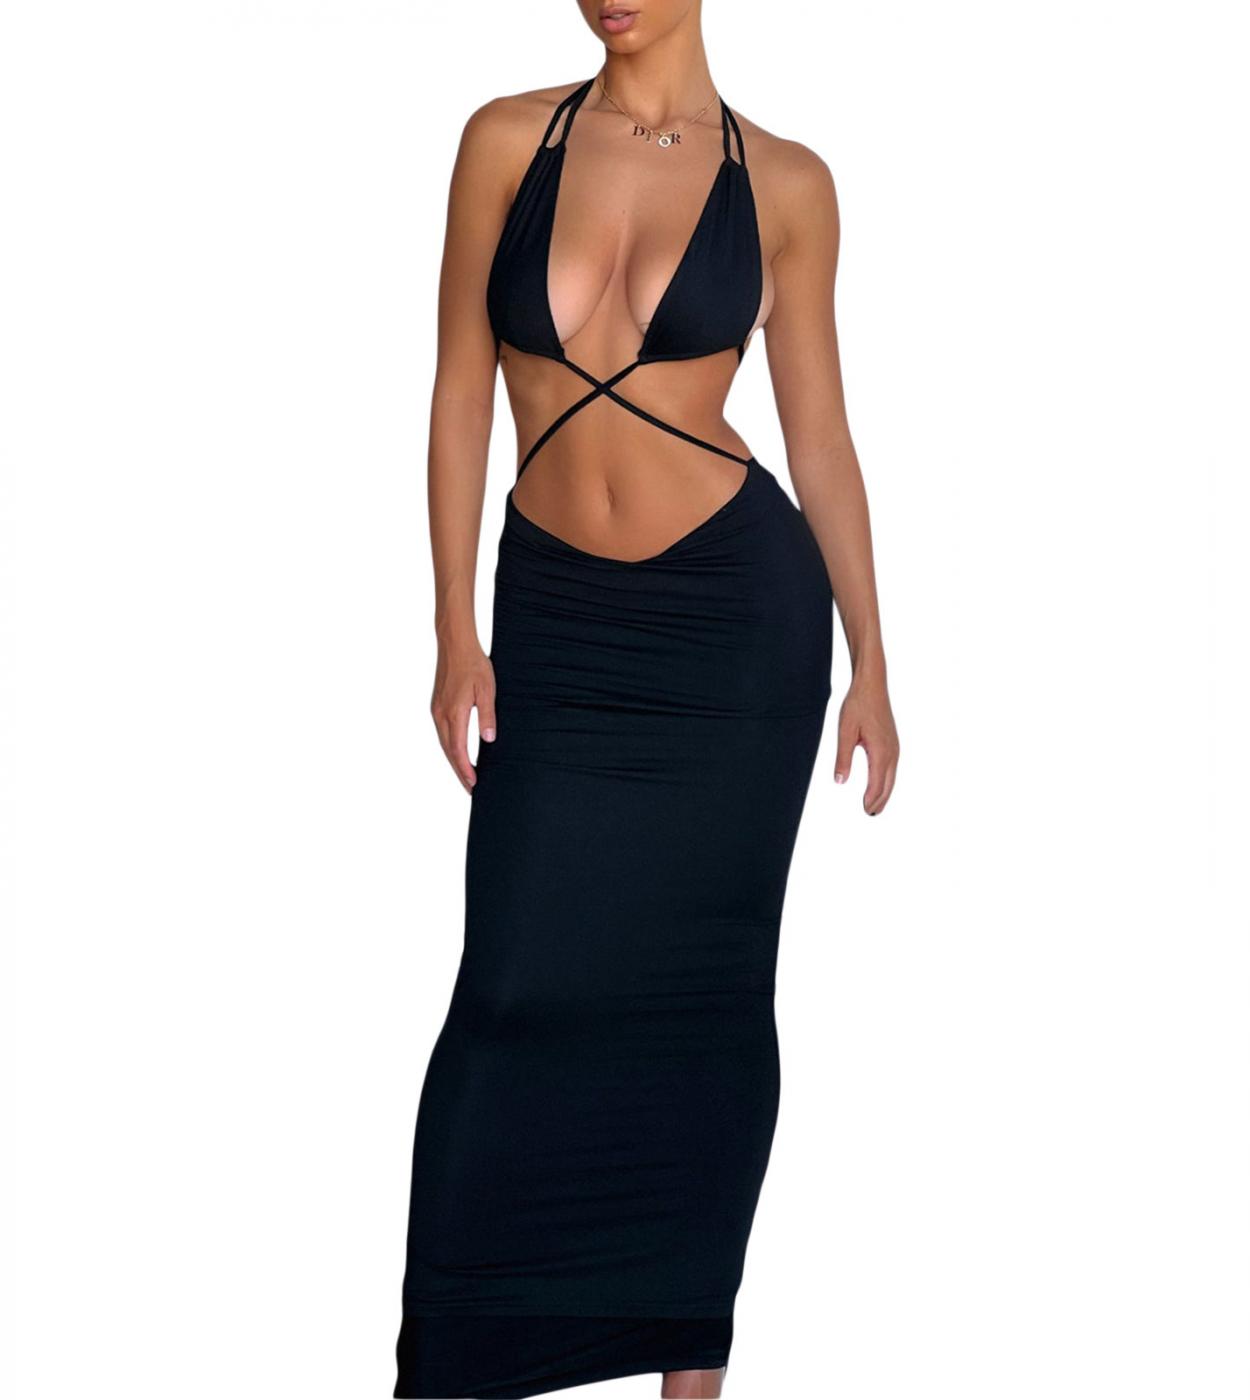 Backless Hollow Dress, Thin Belt,  Party Dress,  New   Mesh Short Skirt Models Swimsuit Bikini